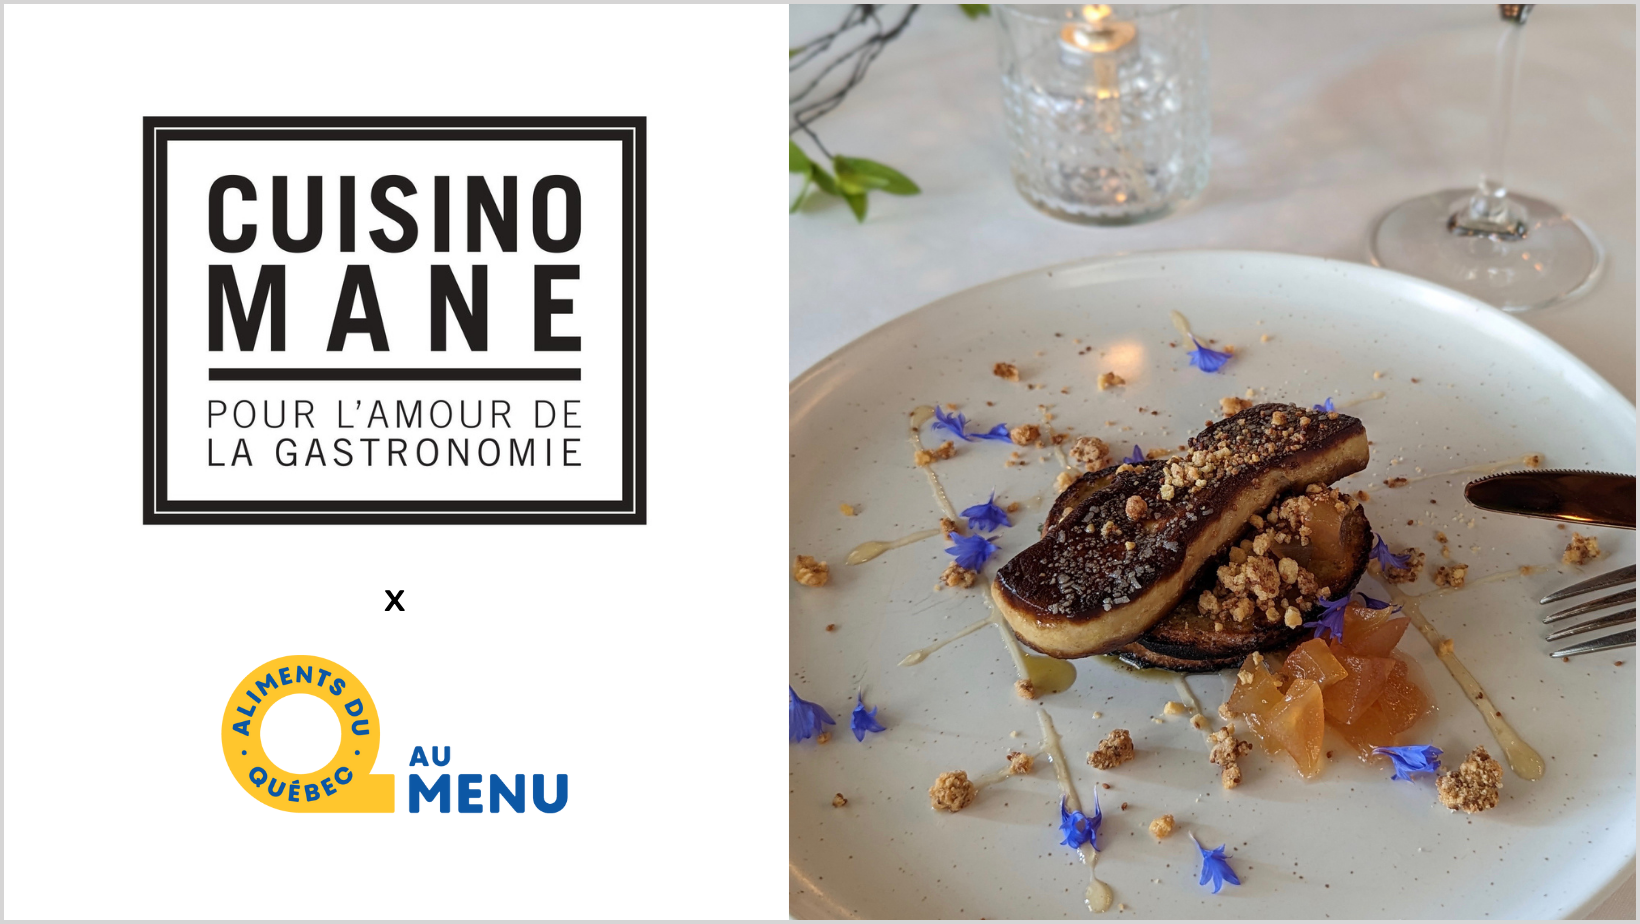 © Le Cuisinomane | Le Géraldine